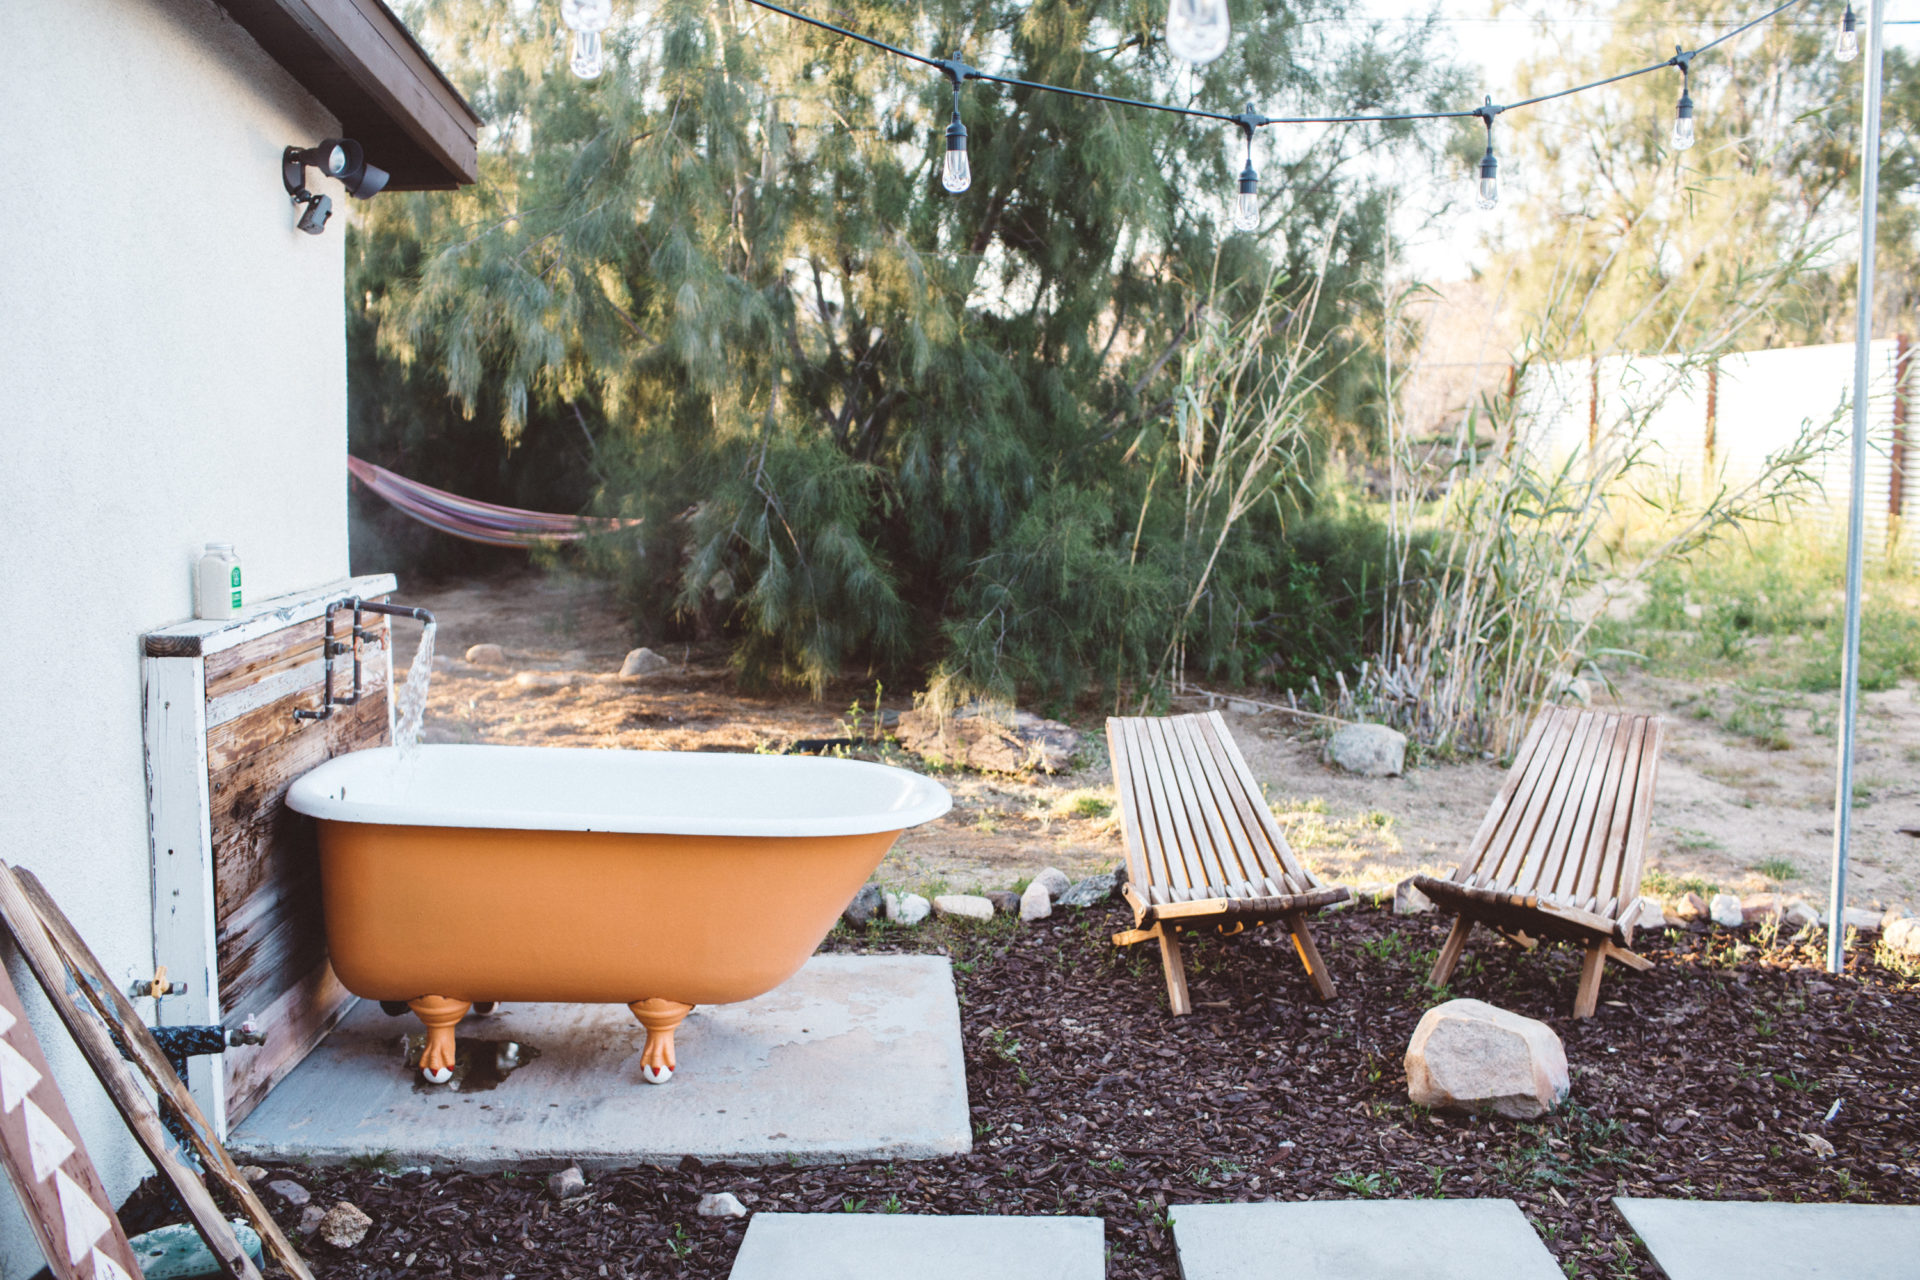 Joshua Tree airbnb with orange bath tub